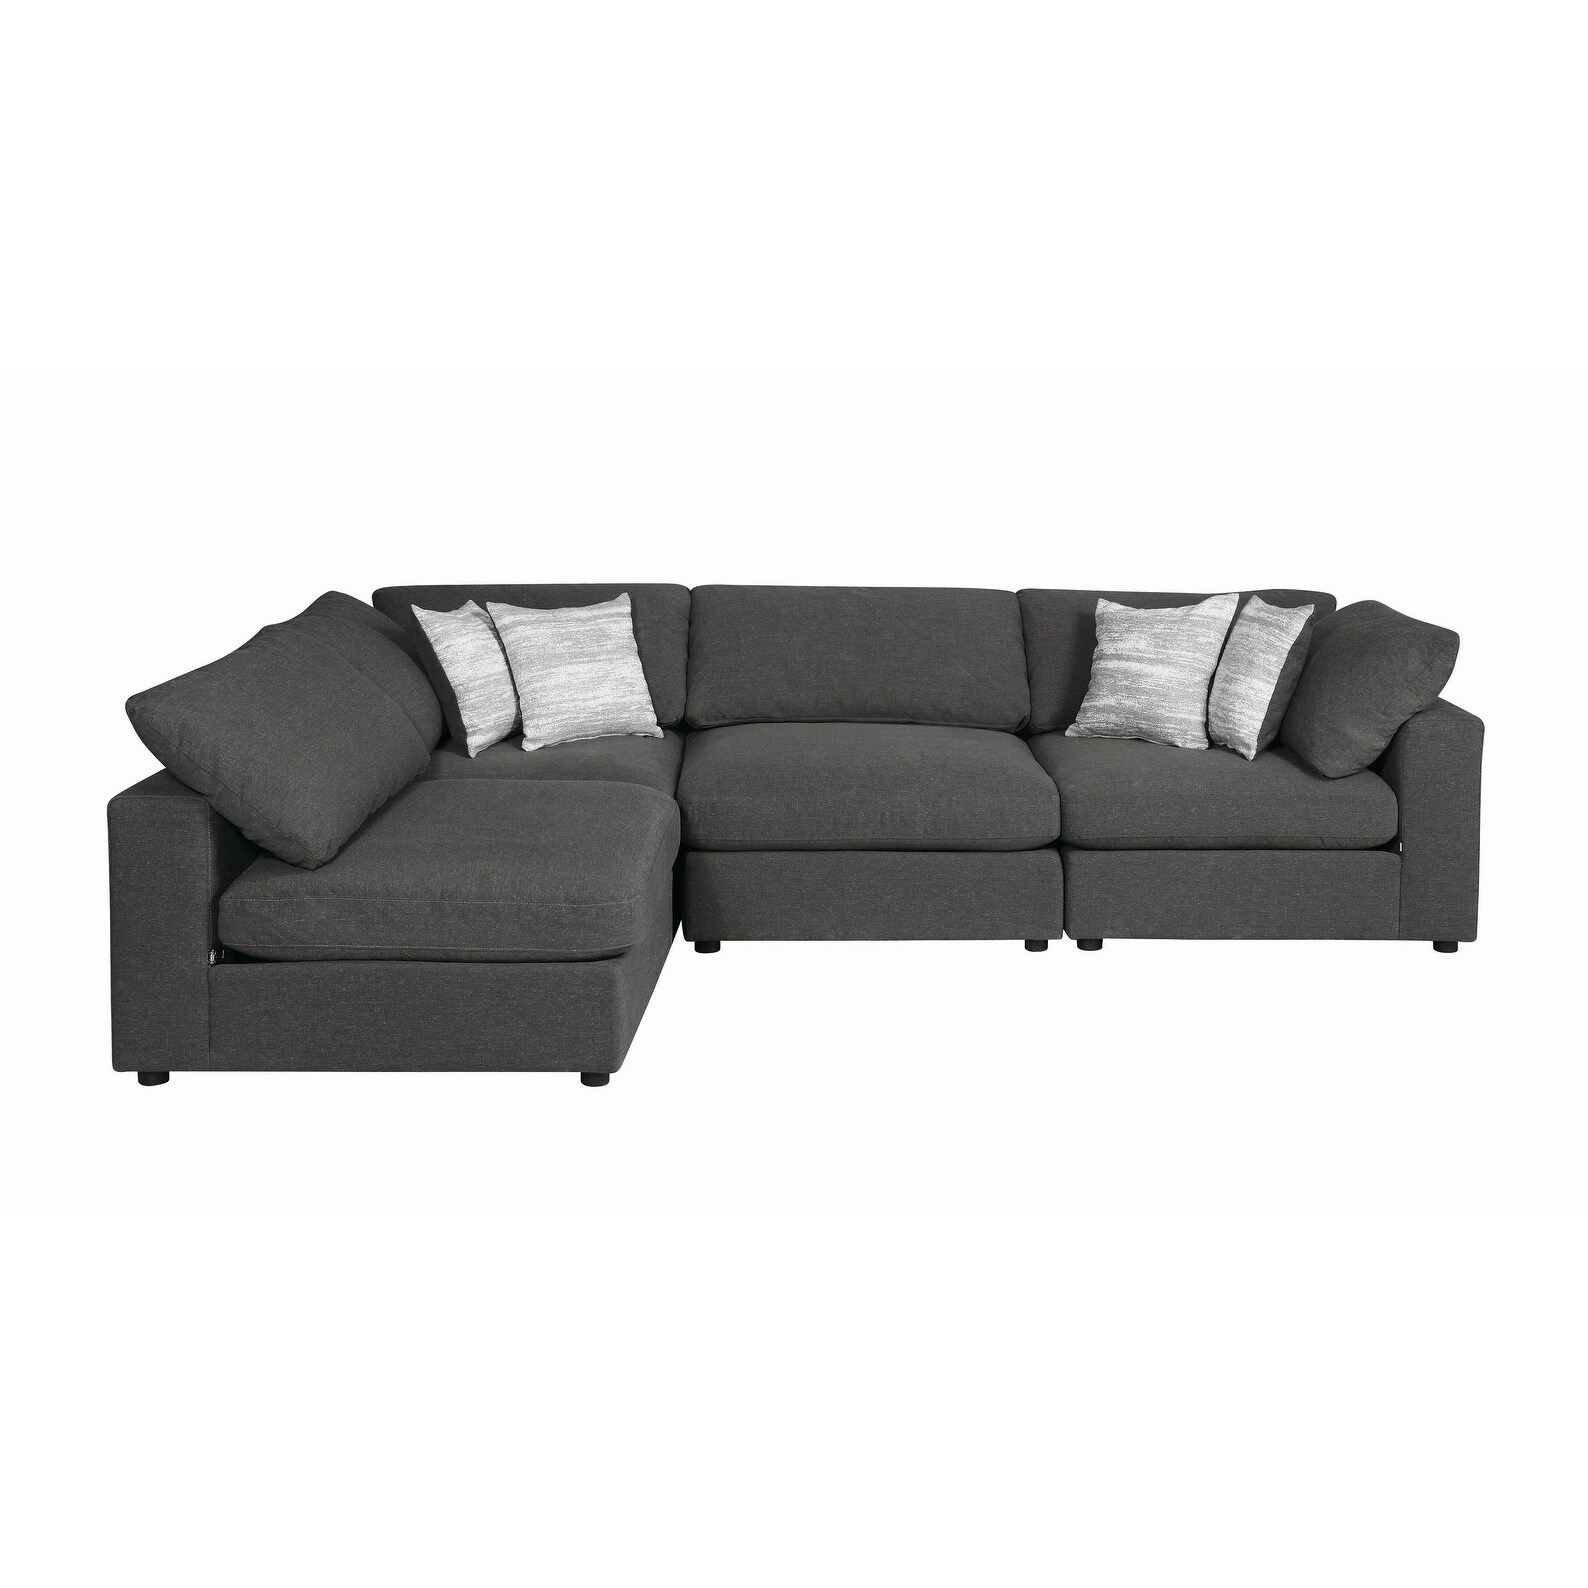 Coaster Furniture Serene 4-piece Upholstered Modular Fabric Sectional